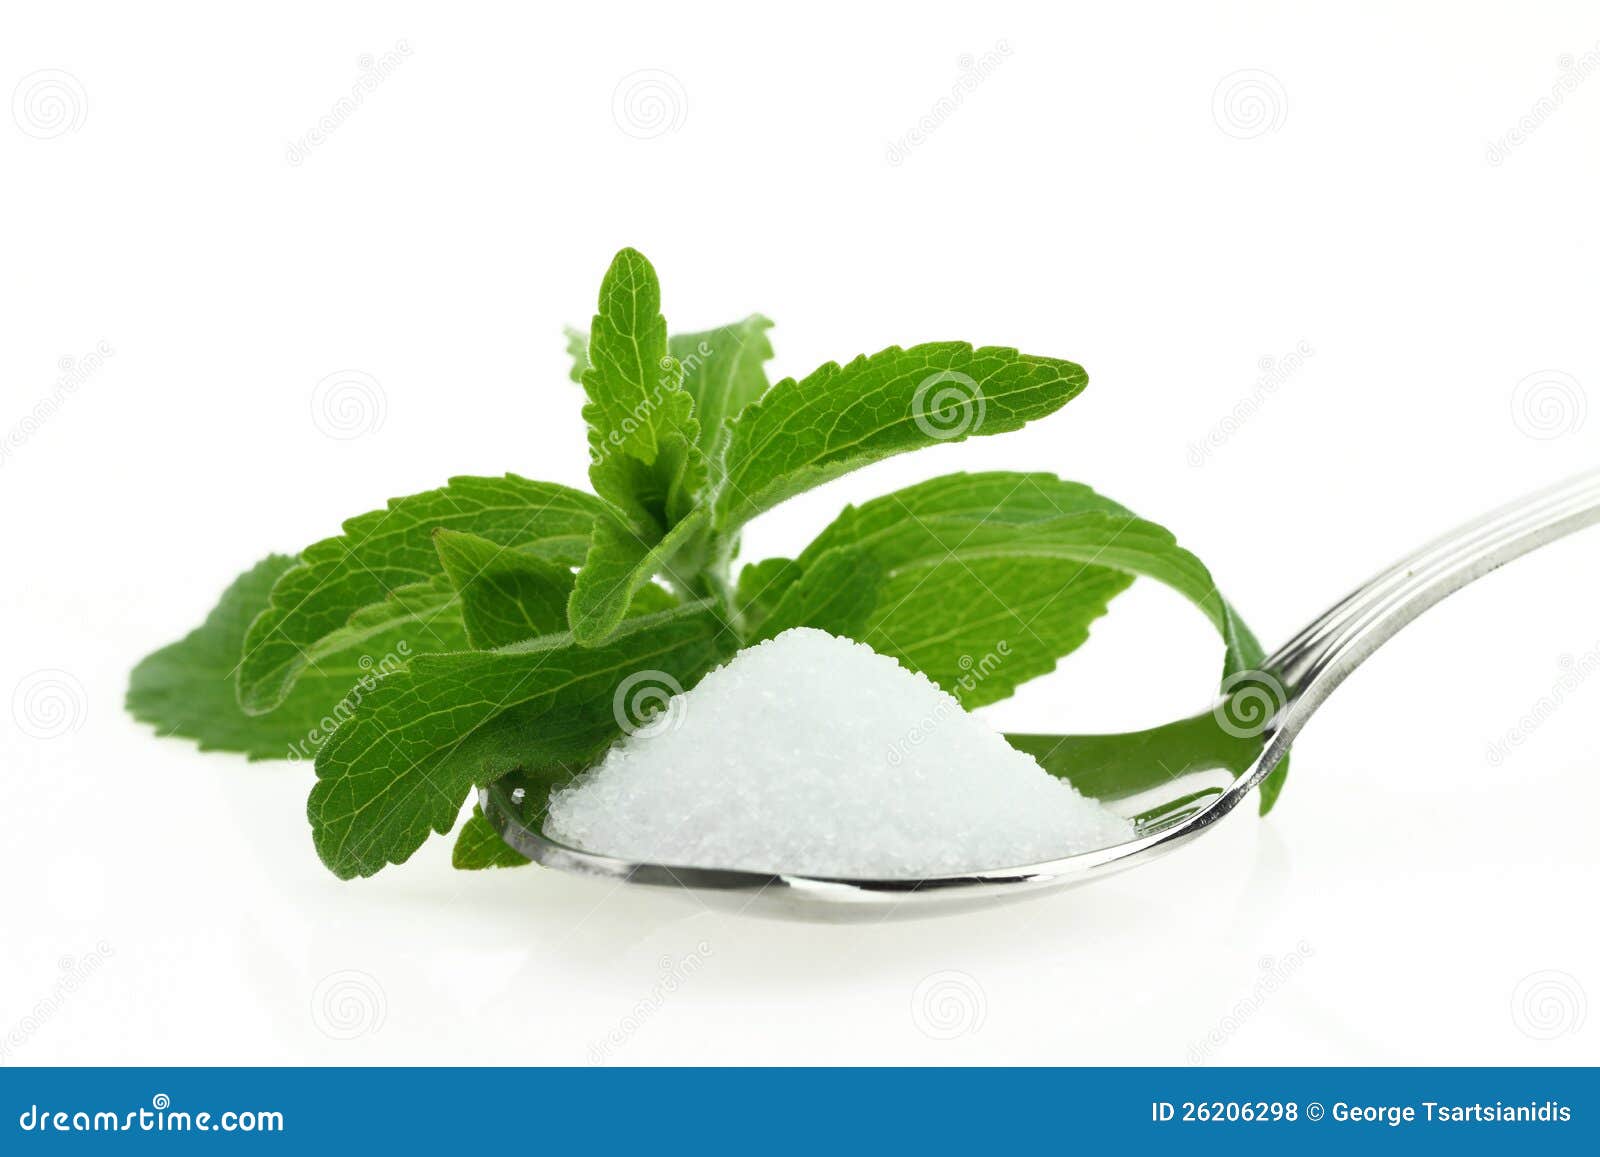 stevia sugar